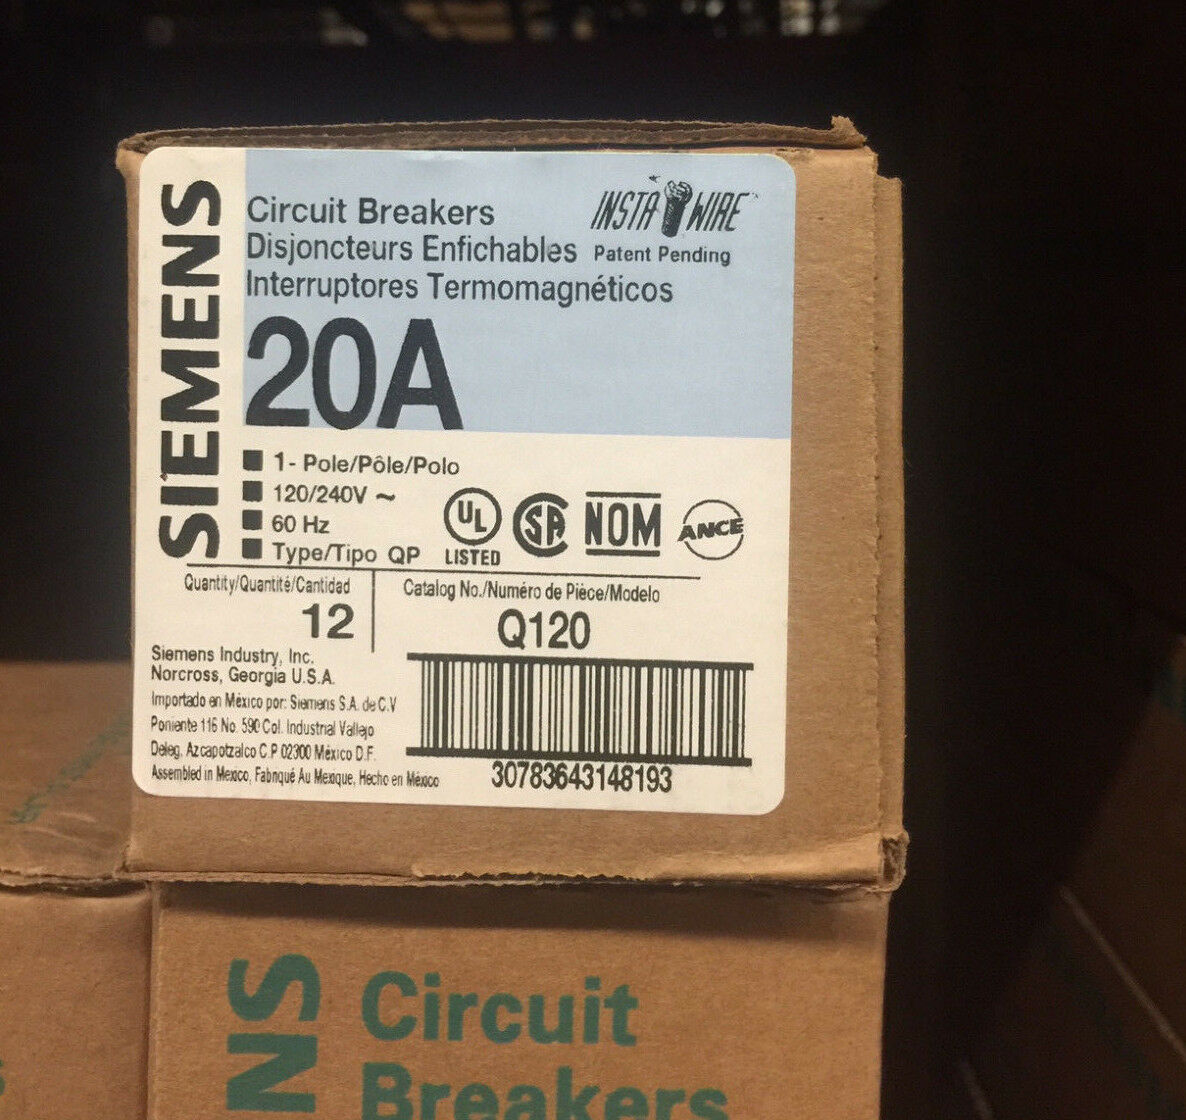 Q120 - (Lot of 48 pcs) Siemens 20 Amp Single Pole Circuit Breaker